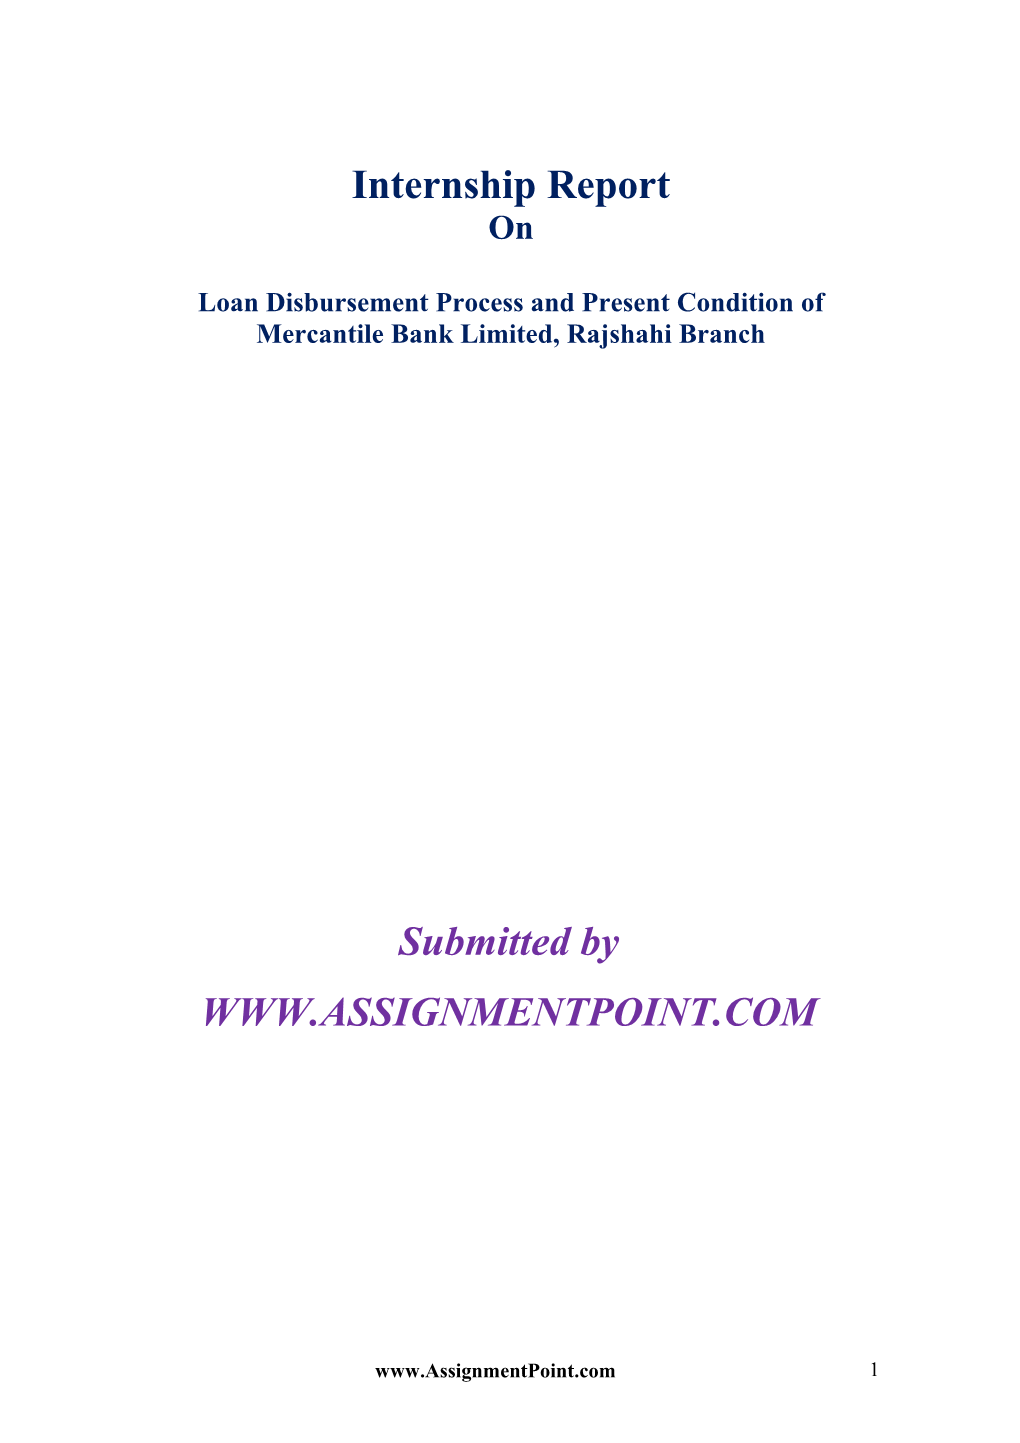 Loan Disbursement Process and Present Condition of Mercantile Bank Limited, Rajshahi Branch